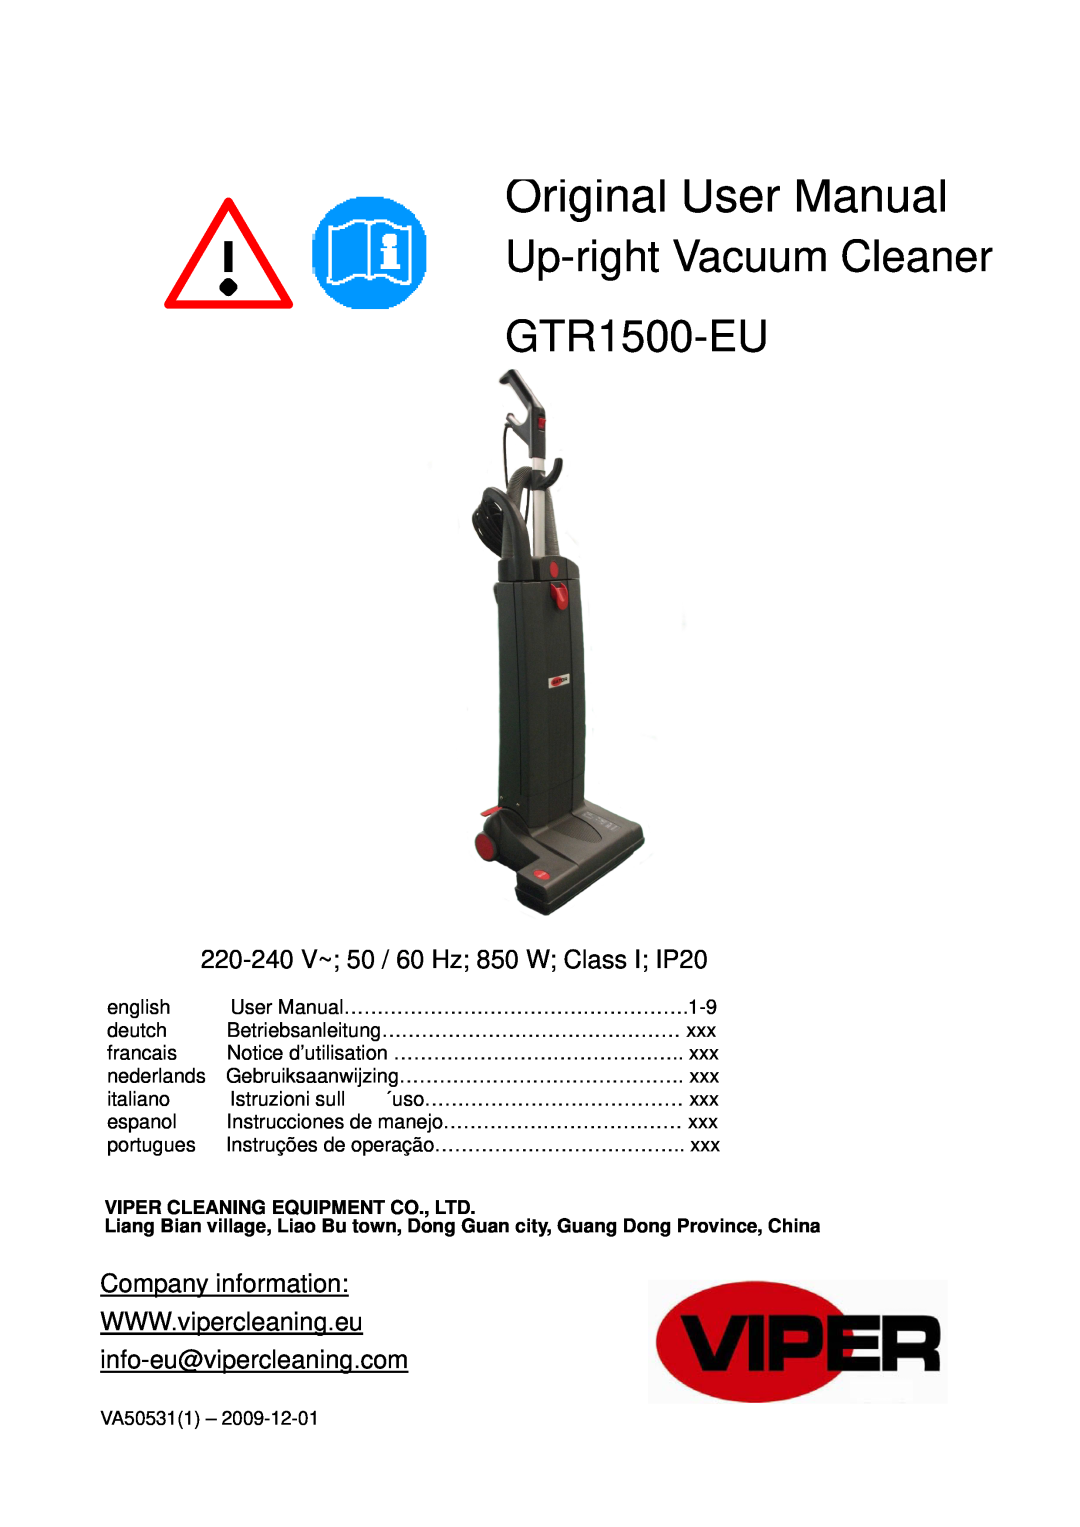 Viper user manual 220-240V~ 50 / 60 Hz 850 W Class I IP20, Up-rightVacuum Cleaner GTR1500-EU, english, deutch, francais 